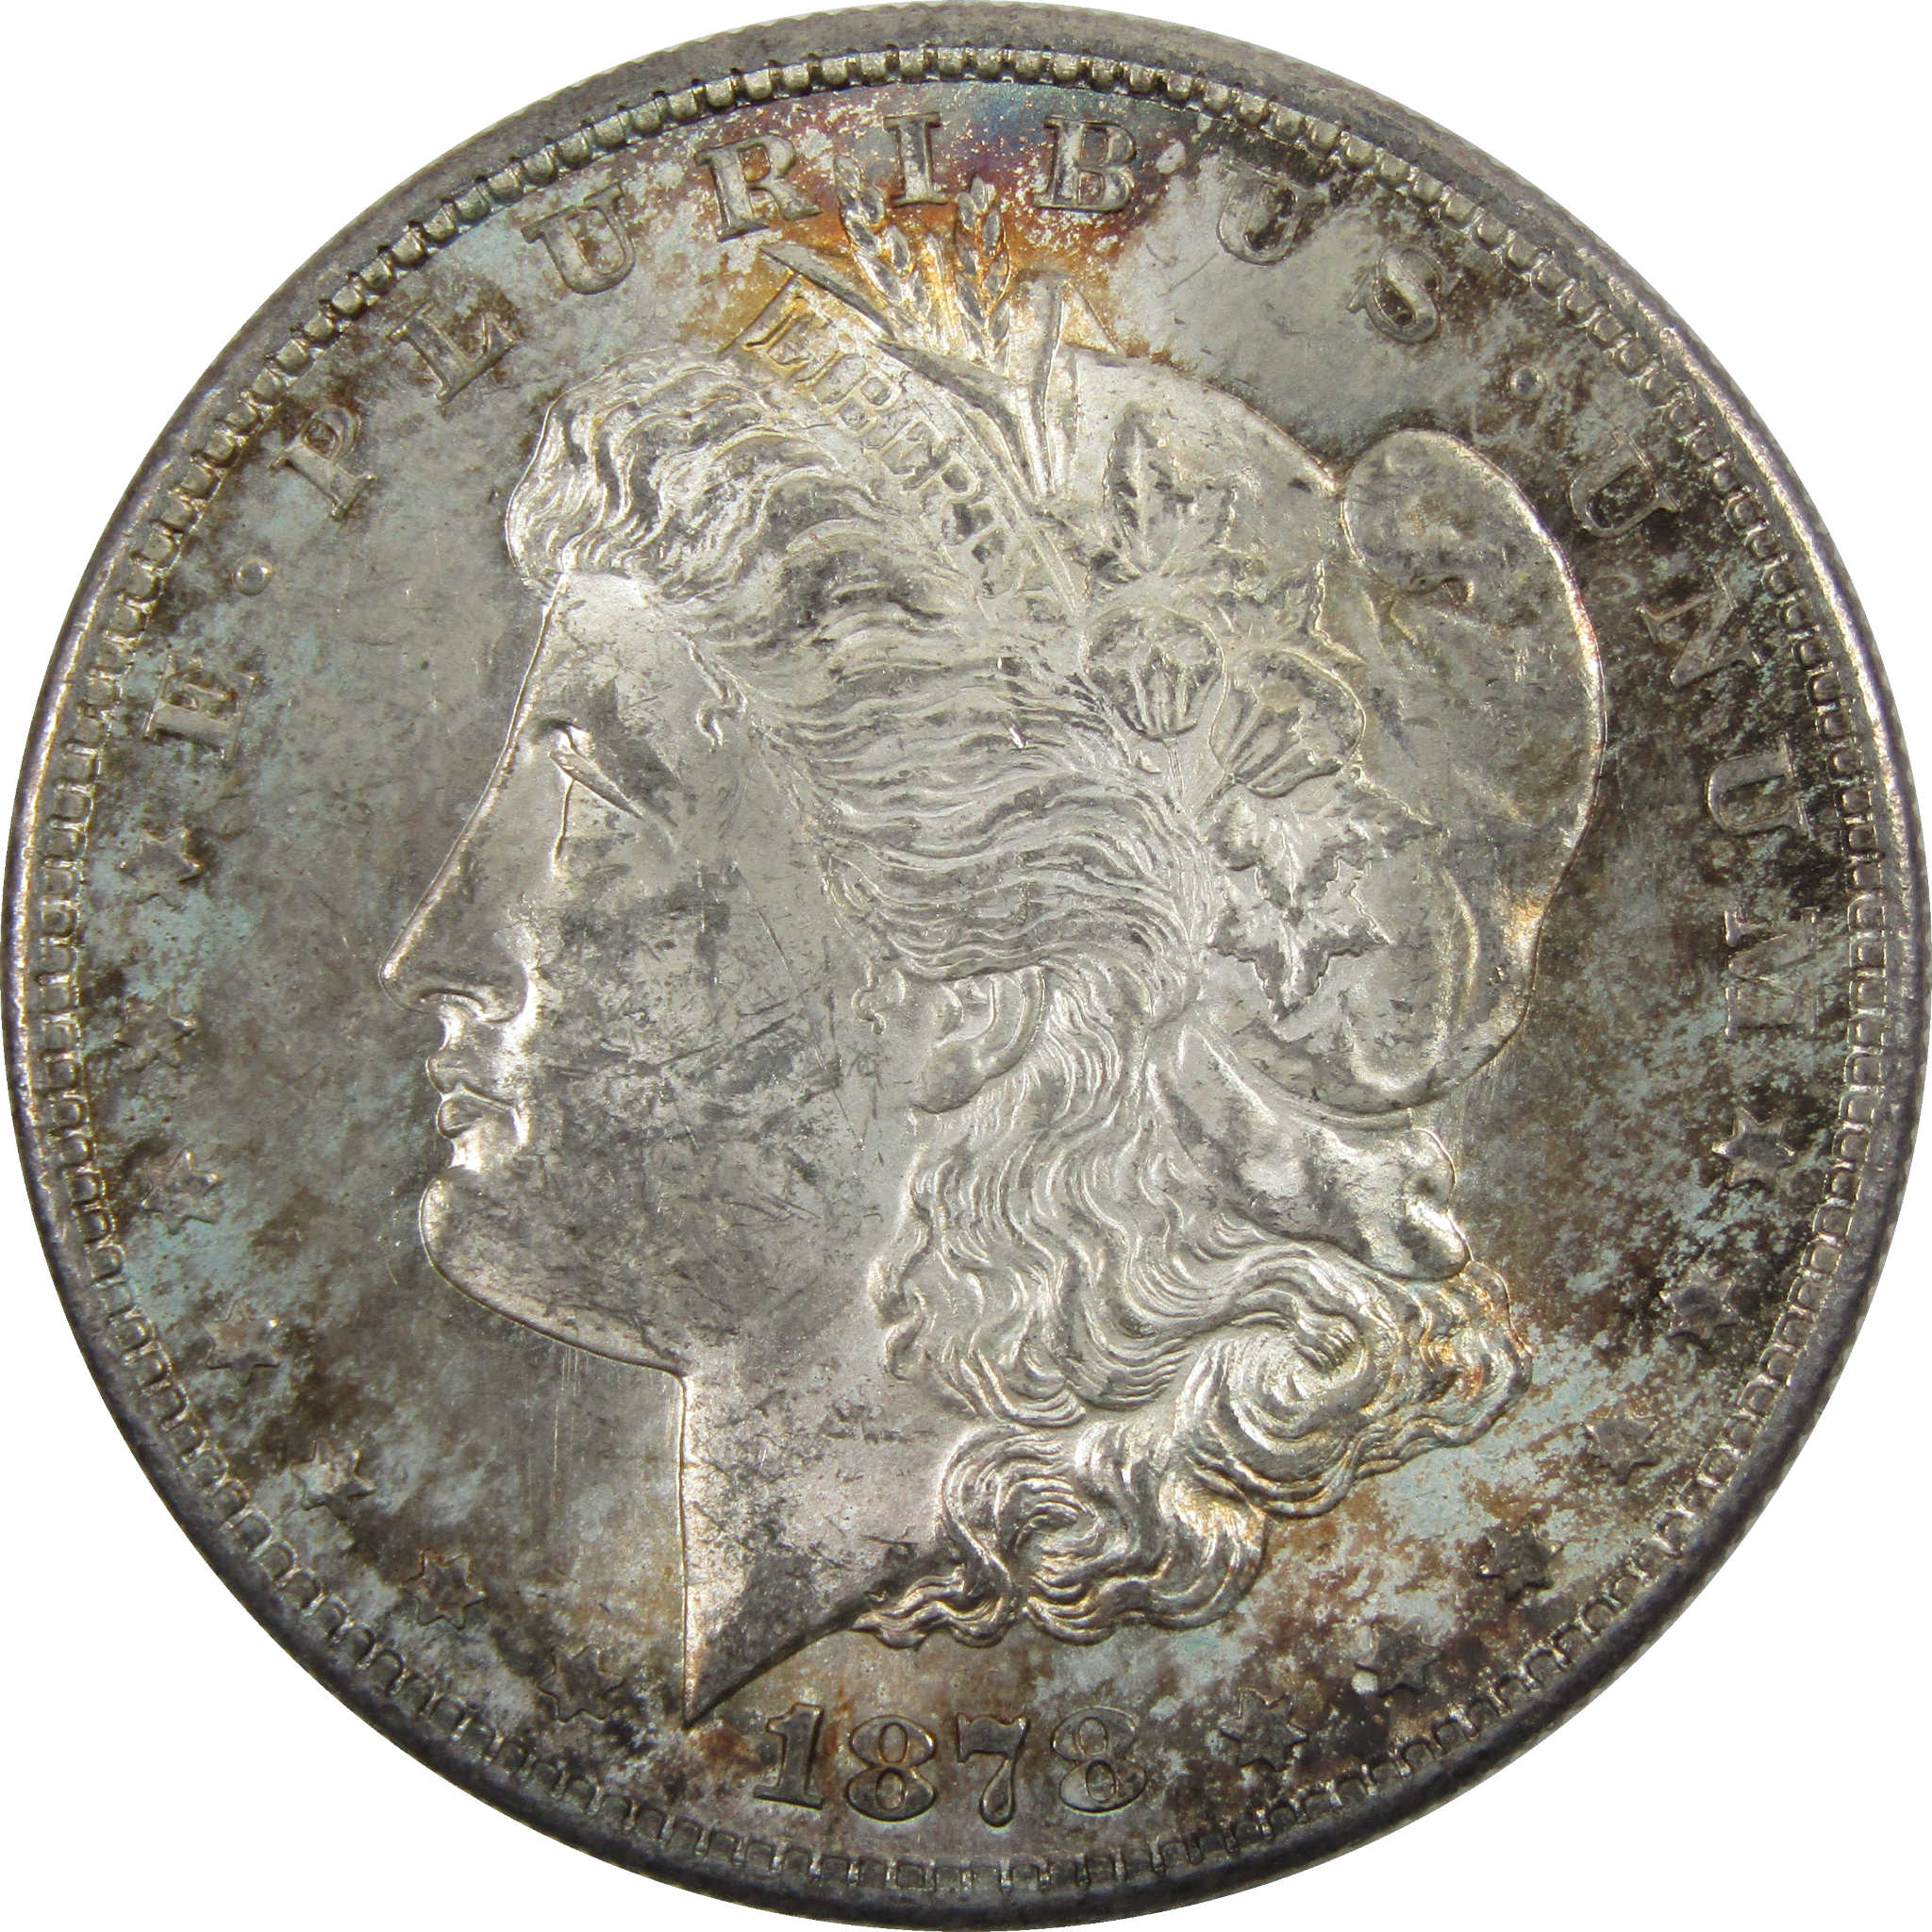 1878 S Morgan Dollar BU Uncirculated 90% Silver $1 Coin SKU:I6050 - Morgan coin - Morgan silver dollar - Morgan silver dollar for sale - Profile Coins &amp; Collectibles